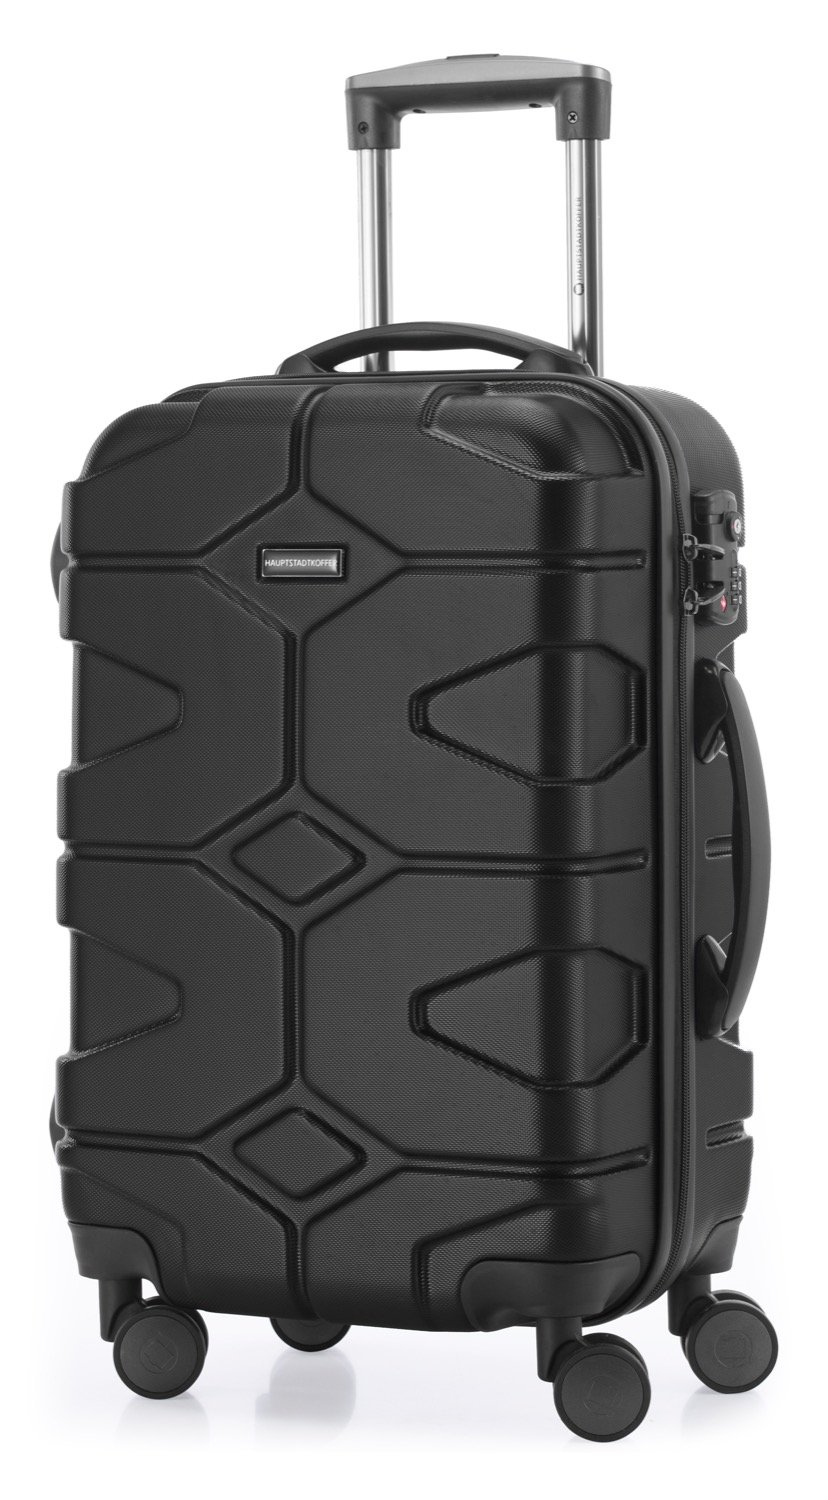 HAUPTSTADTKOFFER - X-Kölln - Handgepäck Hartschalen-Koffer Trolley Rollkoffer Reisekoffer, TSA, 55 cm, 50 Liter, Schwarz matt